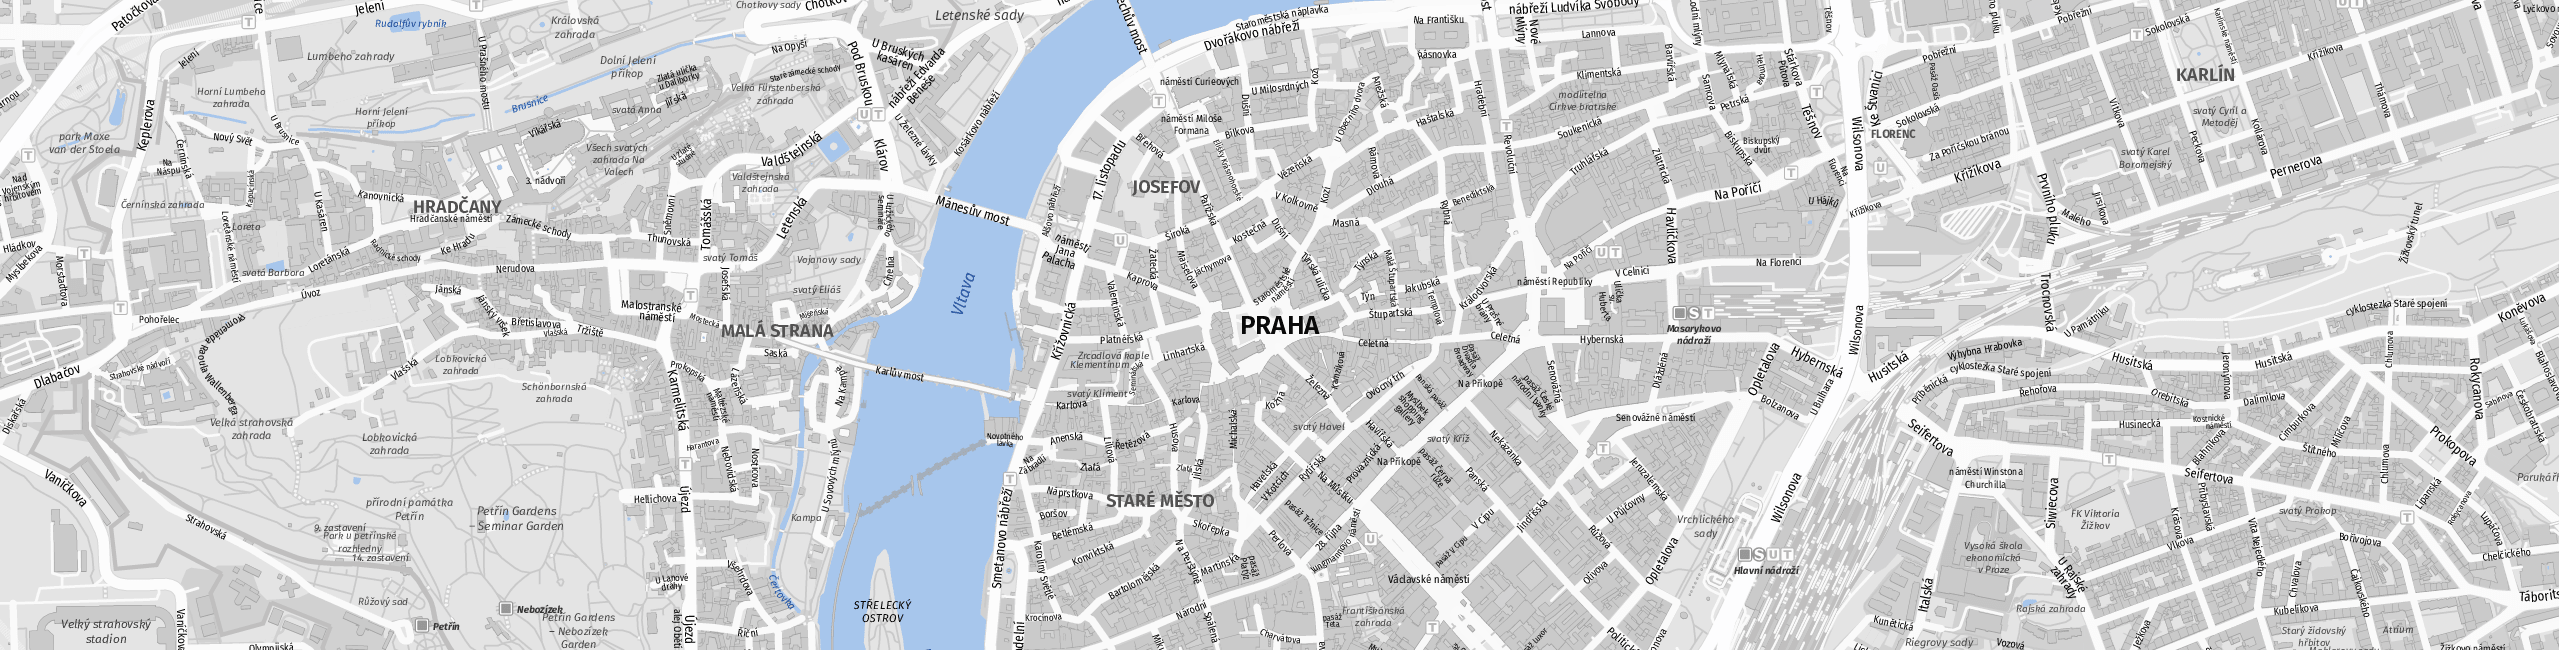 Stadtplan Prague zum Downloaden.